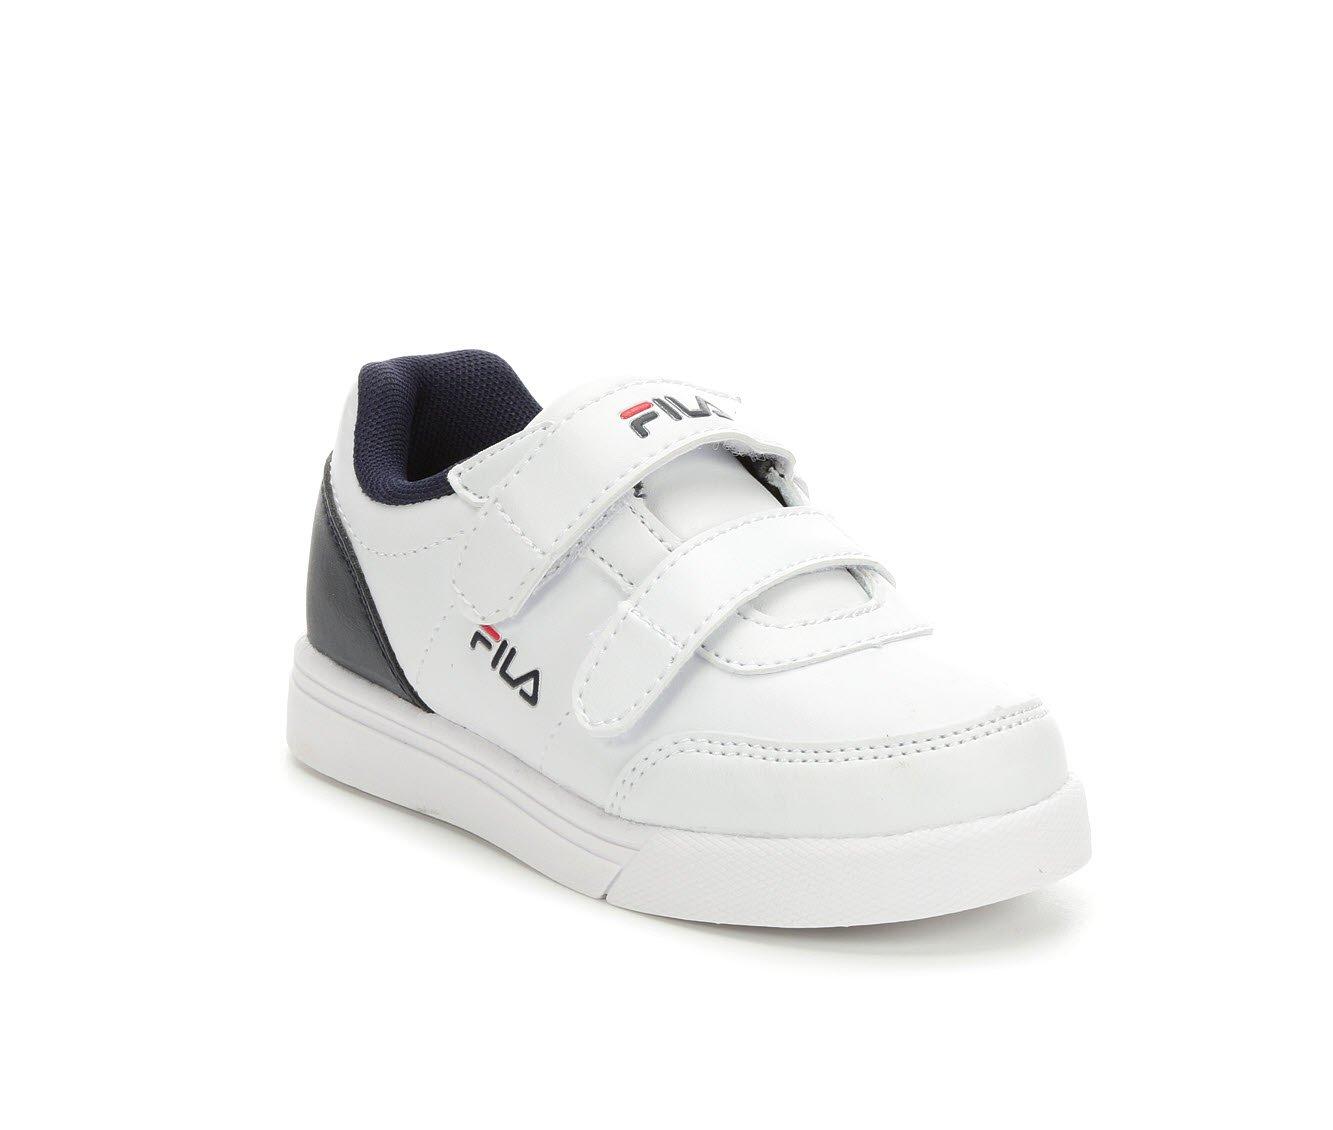 Boys\' Fila Infant & Toddler G1000 Strap Sneakers | Shoe Carnival | Sneaker high